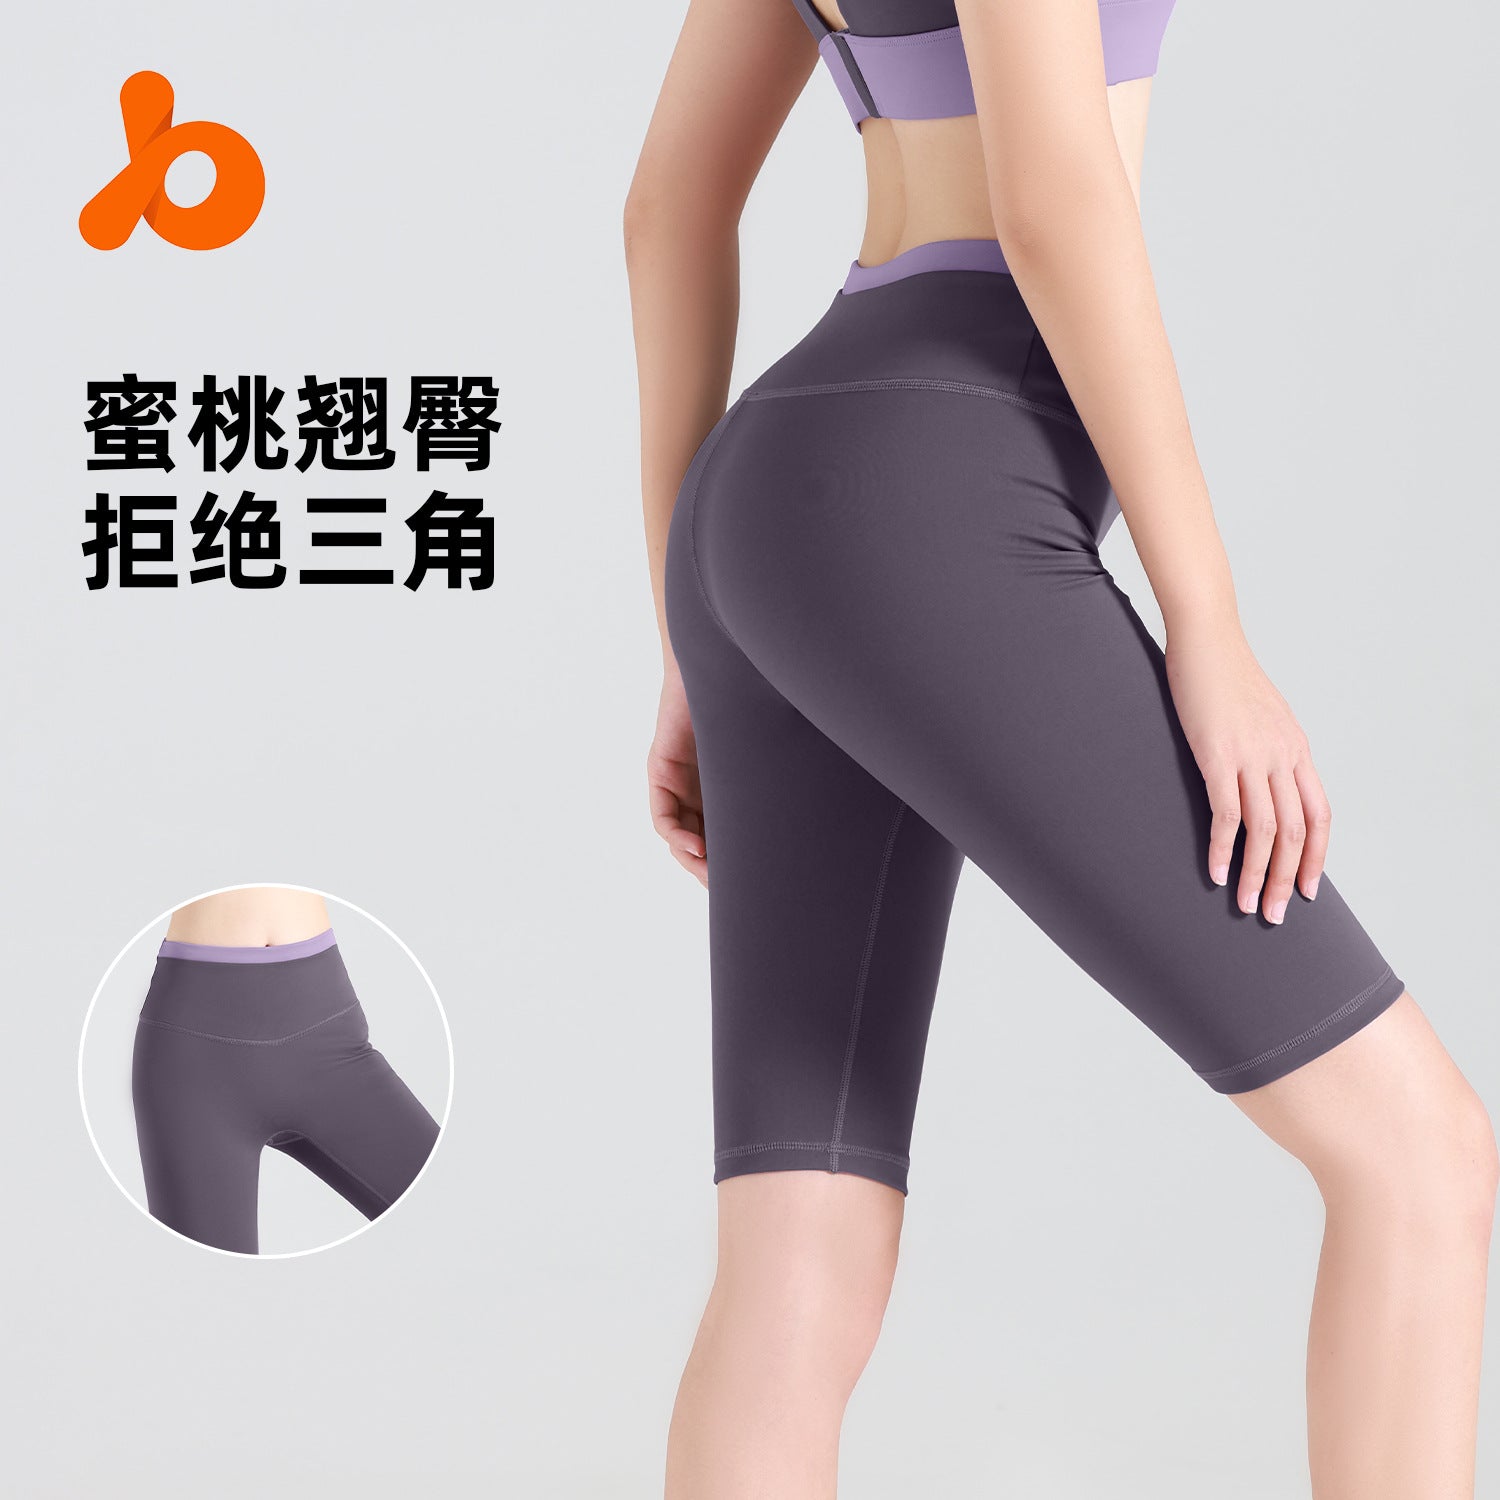 Ju Yi Tang Peach Waist Spliced Capris No Awkwardness Thread Nude High Waist Running Sports Yoga Shorts for Women